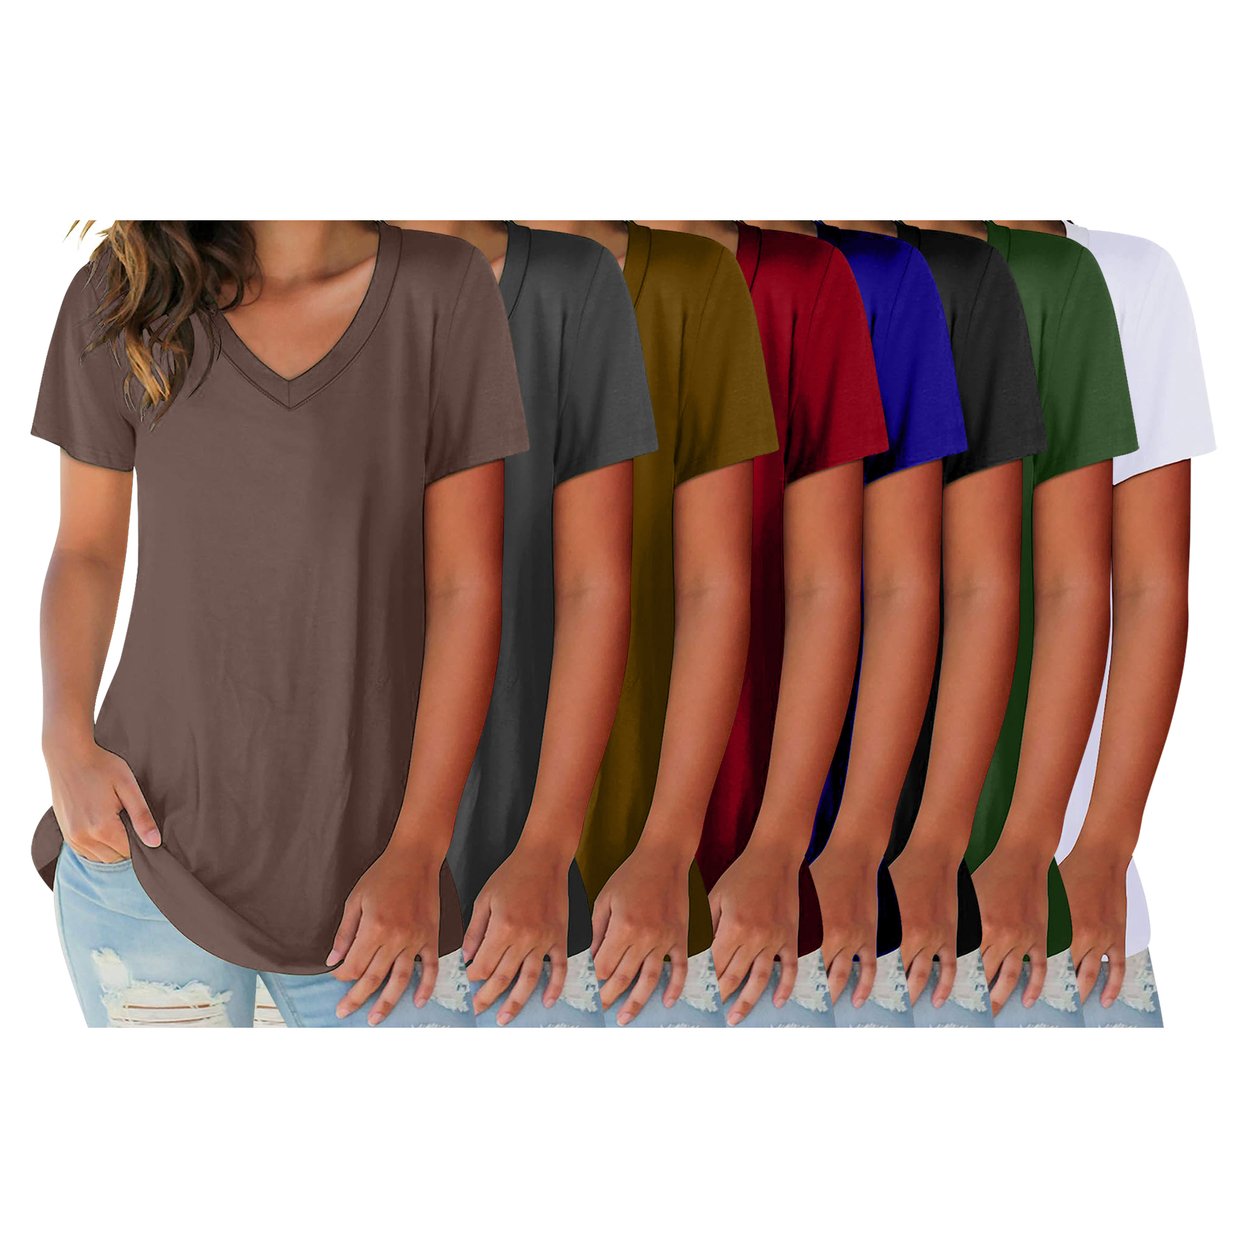 2-Pack: Women's Ultra Soft Smooth Cotton Blend Basic V-Neck Short Sleeve Shirts - Navy & Green, X-large